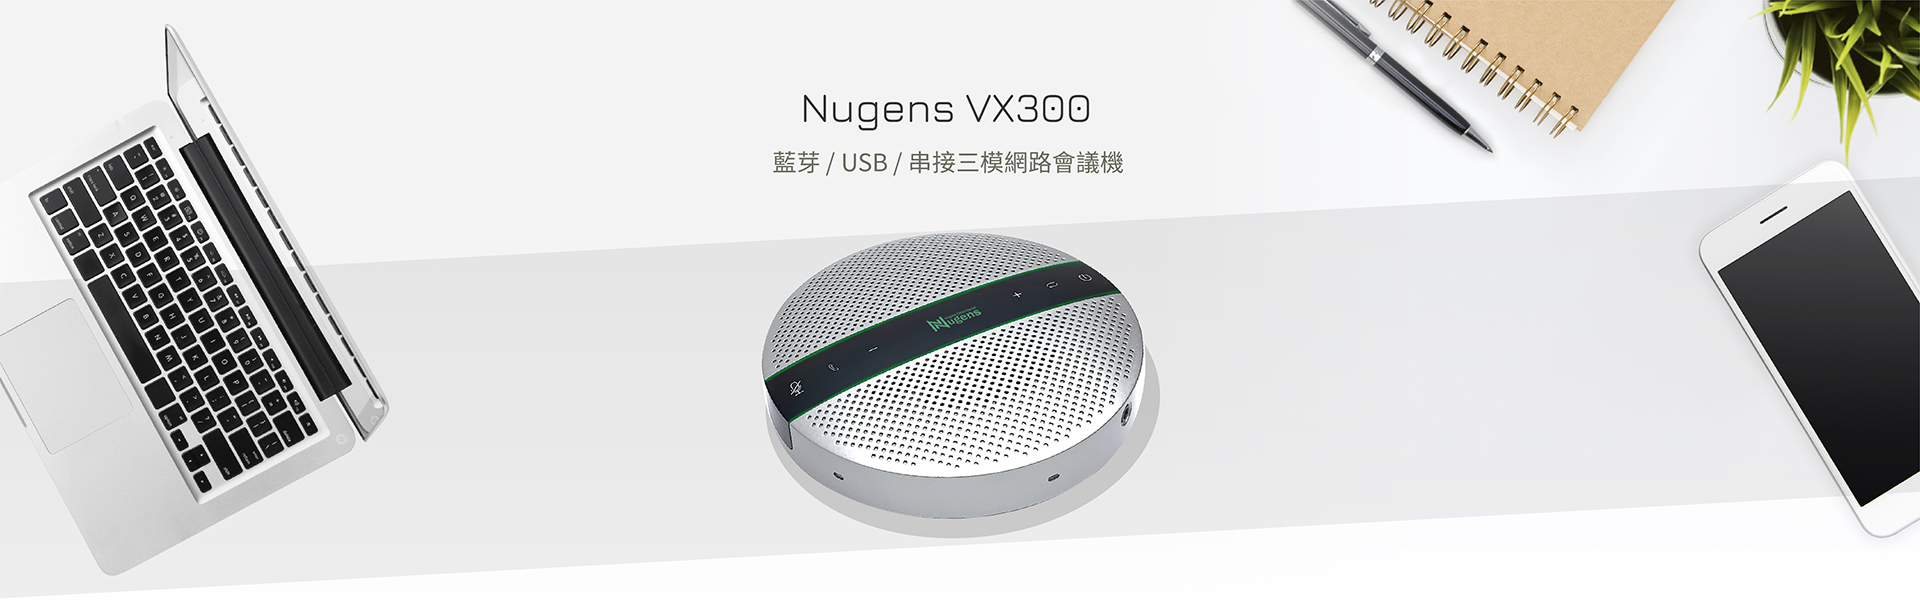 Nugens VX300 藍牙USB串接三模網路會議機情境圖